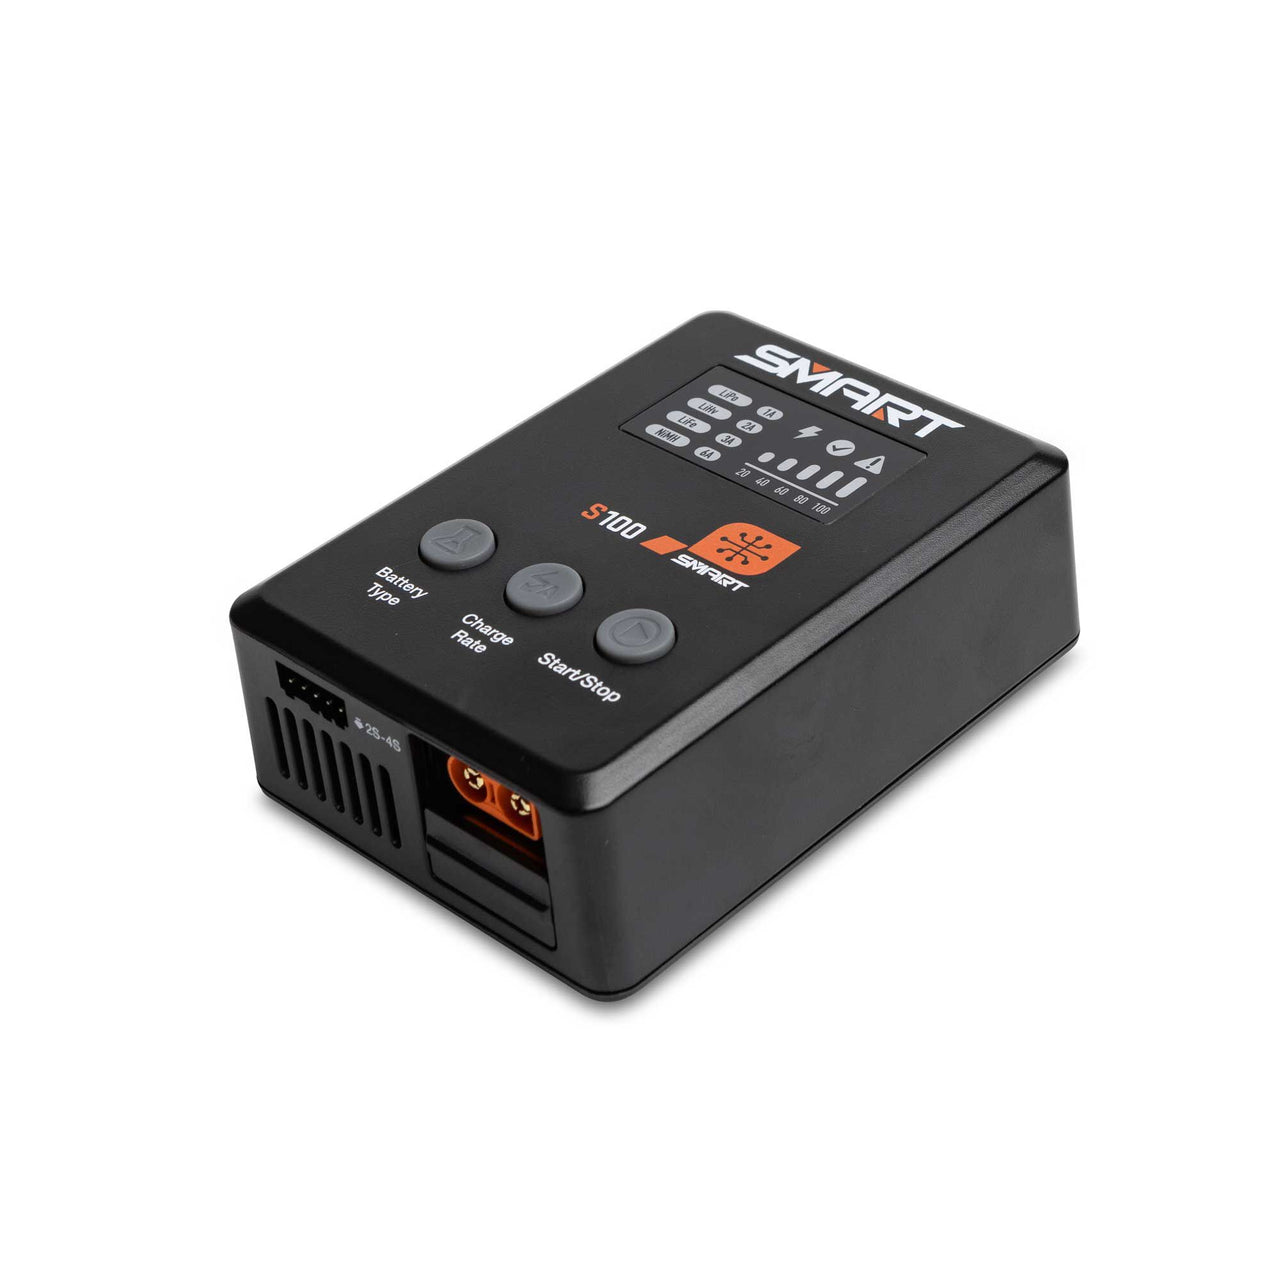 SPMXC2090 Le chargeur USB-C intelligent Spektrum™ S100 